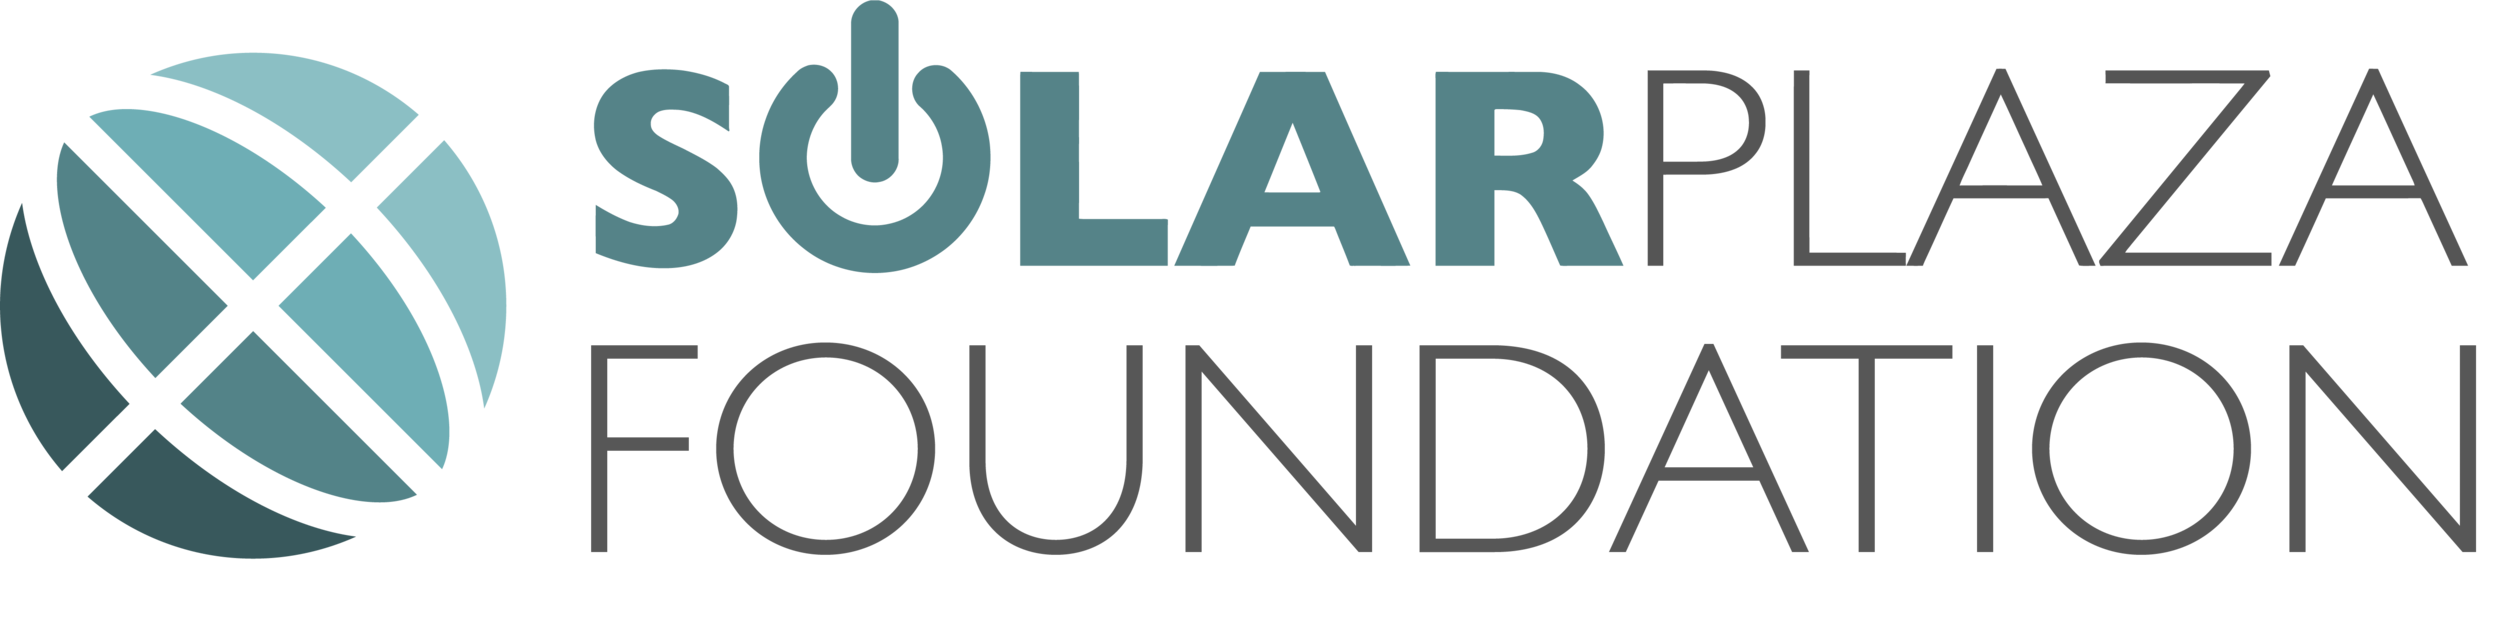 Solarplaza Foundation